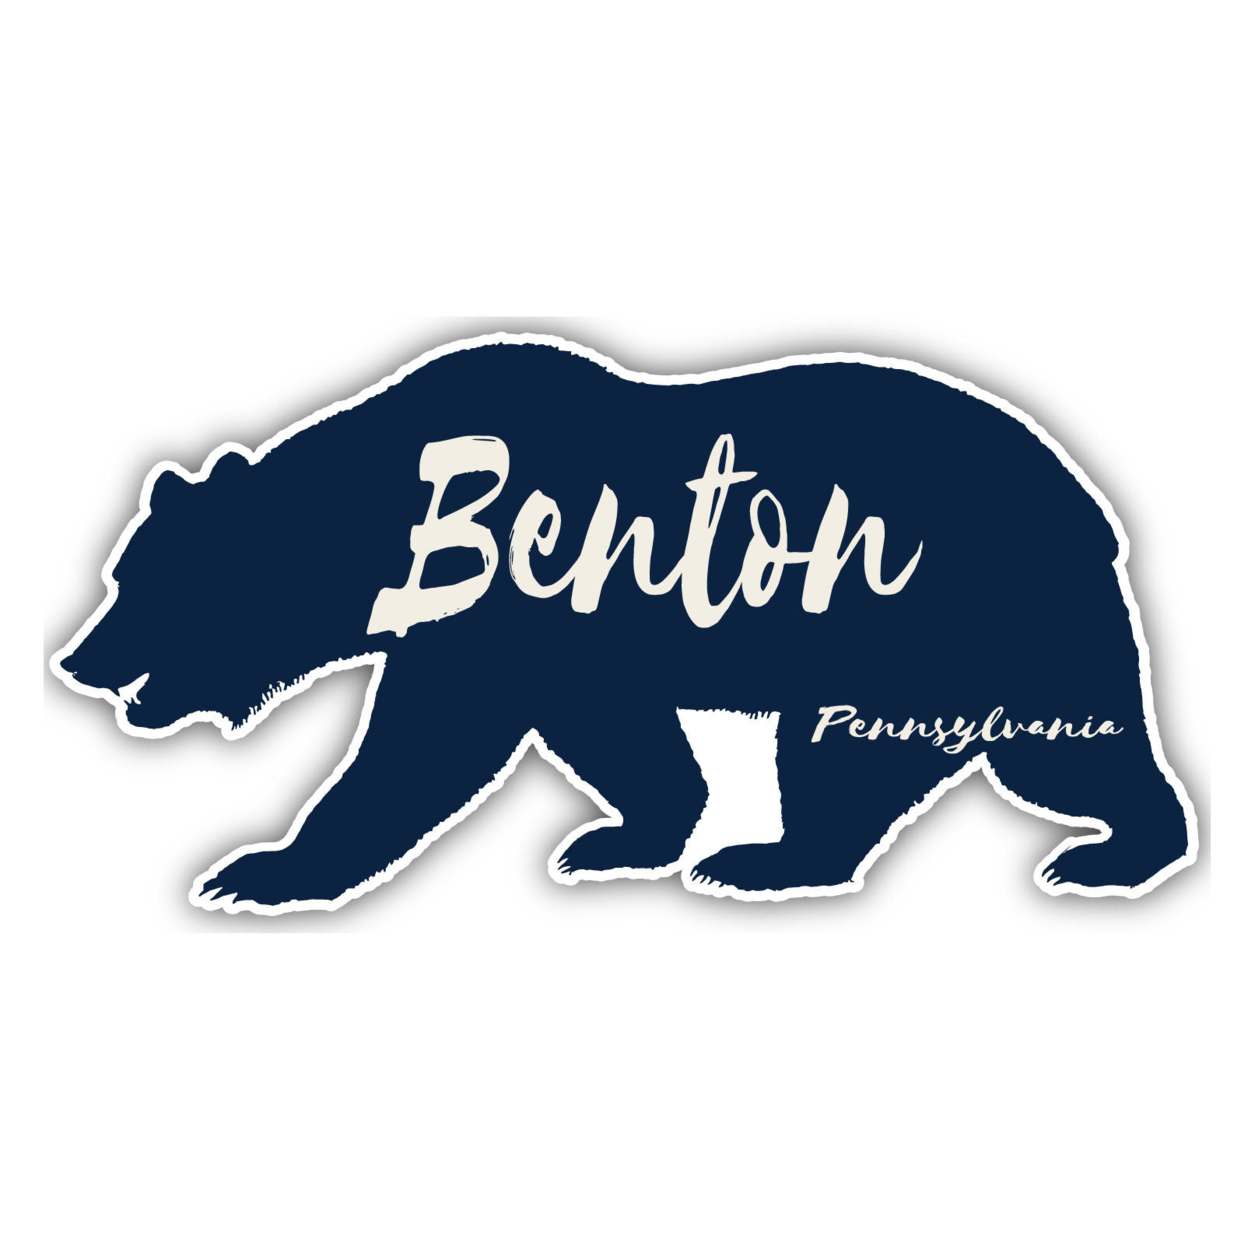 Benton Pennsylvania Souvenir Decorative Stickers (Choose Theme And Size) - 4-Pack, 8-Inch, Bear